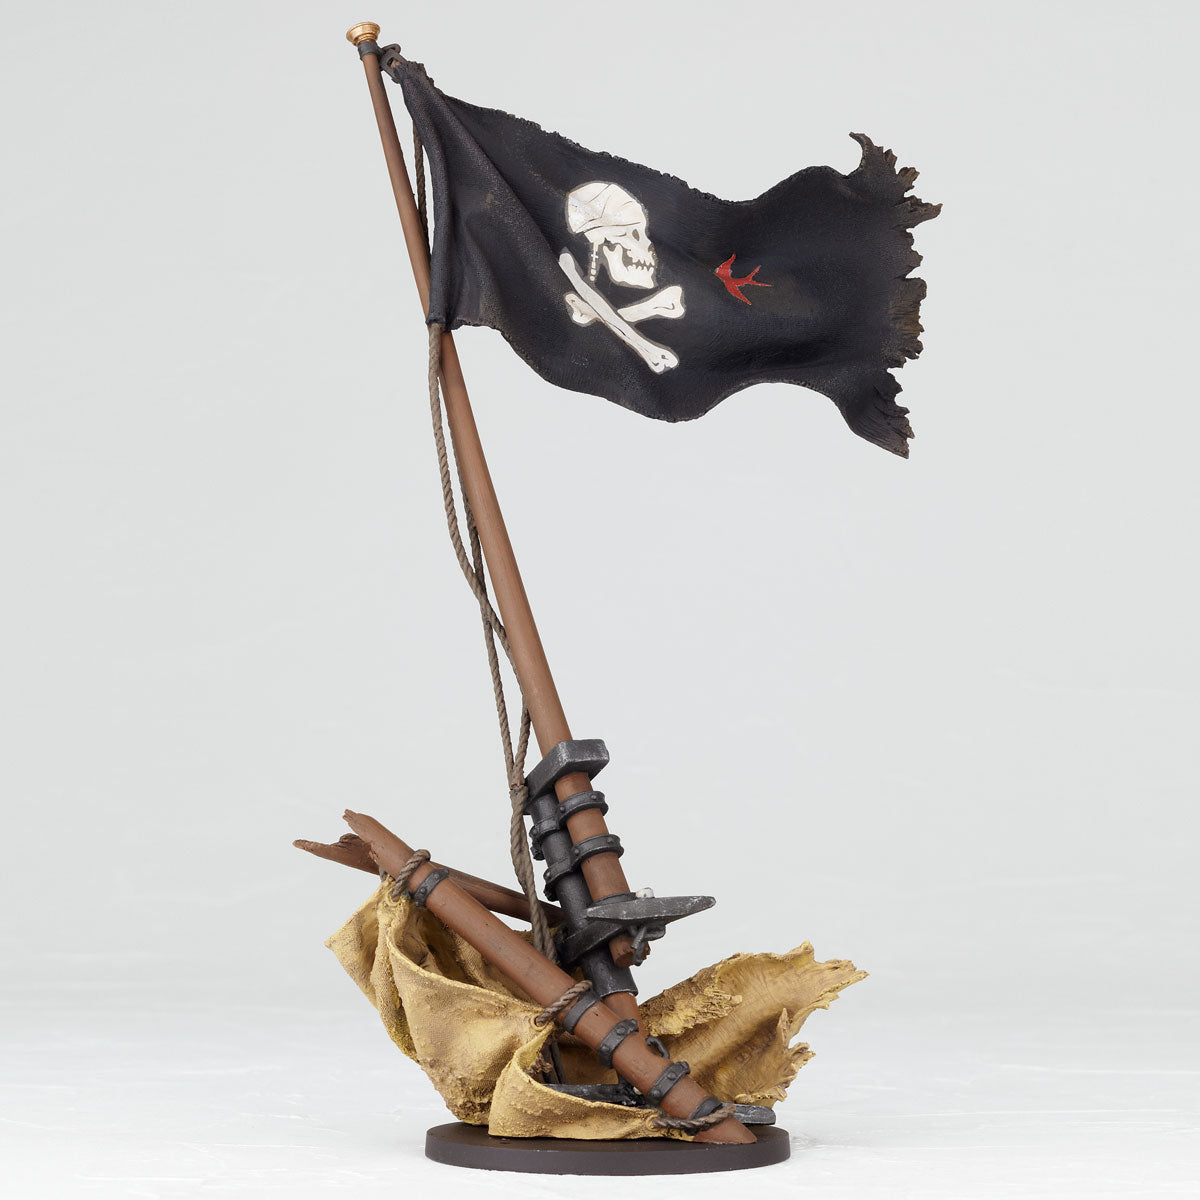 Revoltech "Pirates of the Caribbean" Jack Sparrow